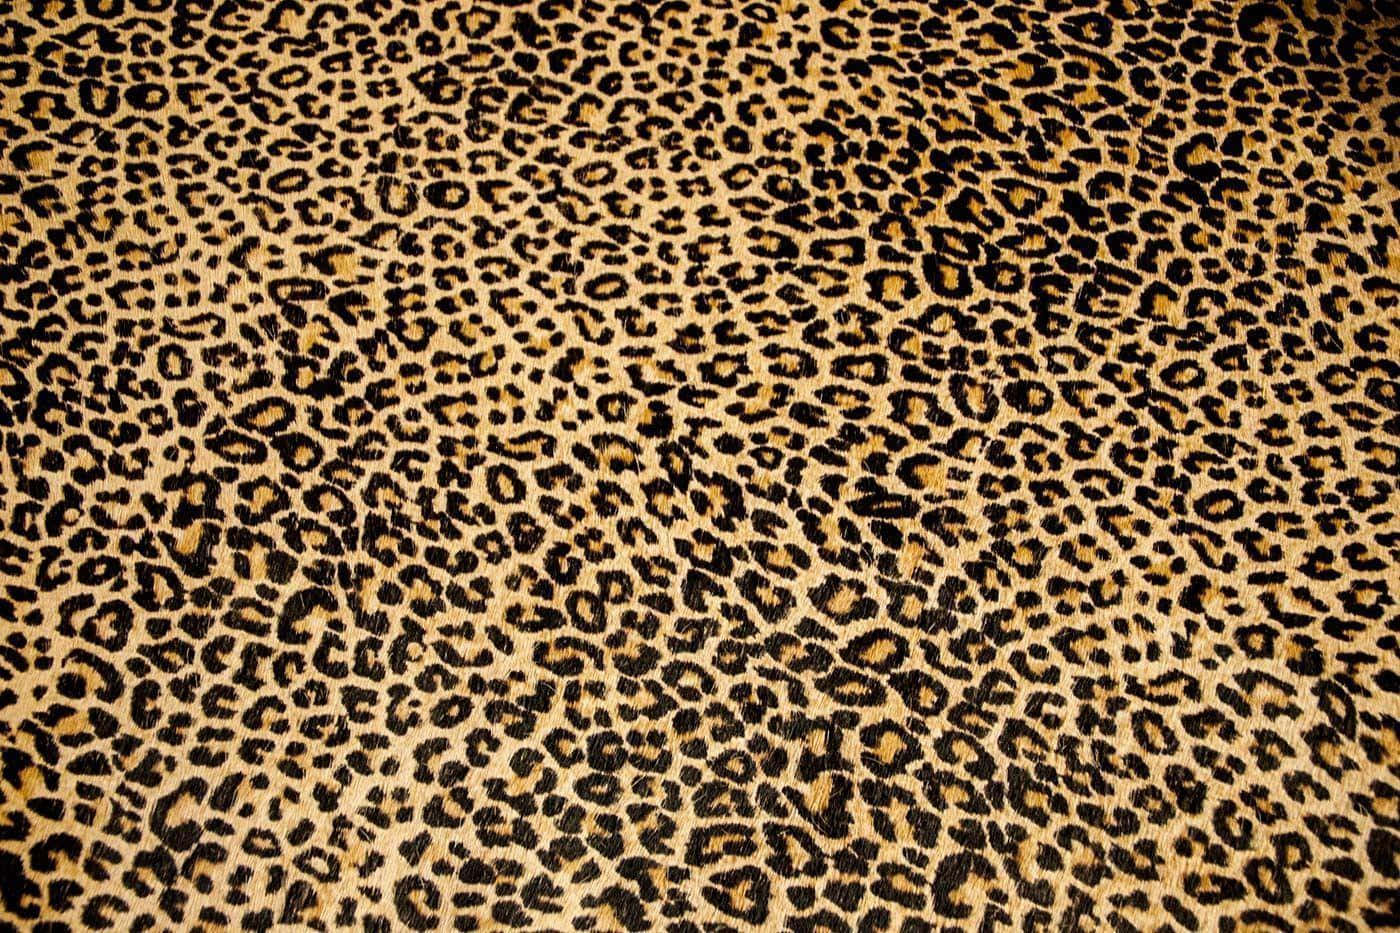 A Close Up Of A Leopard Print Fabric